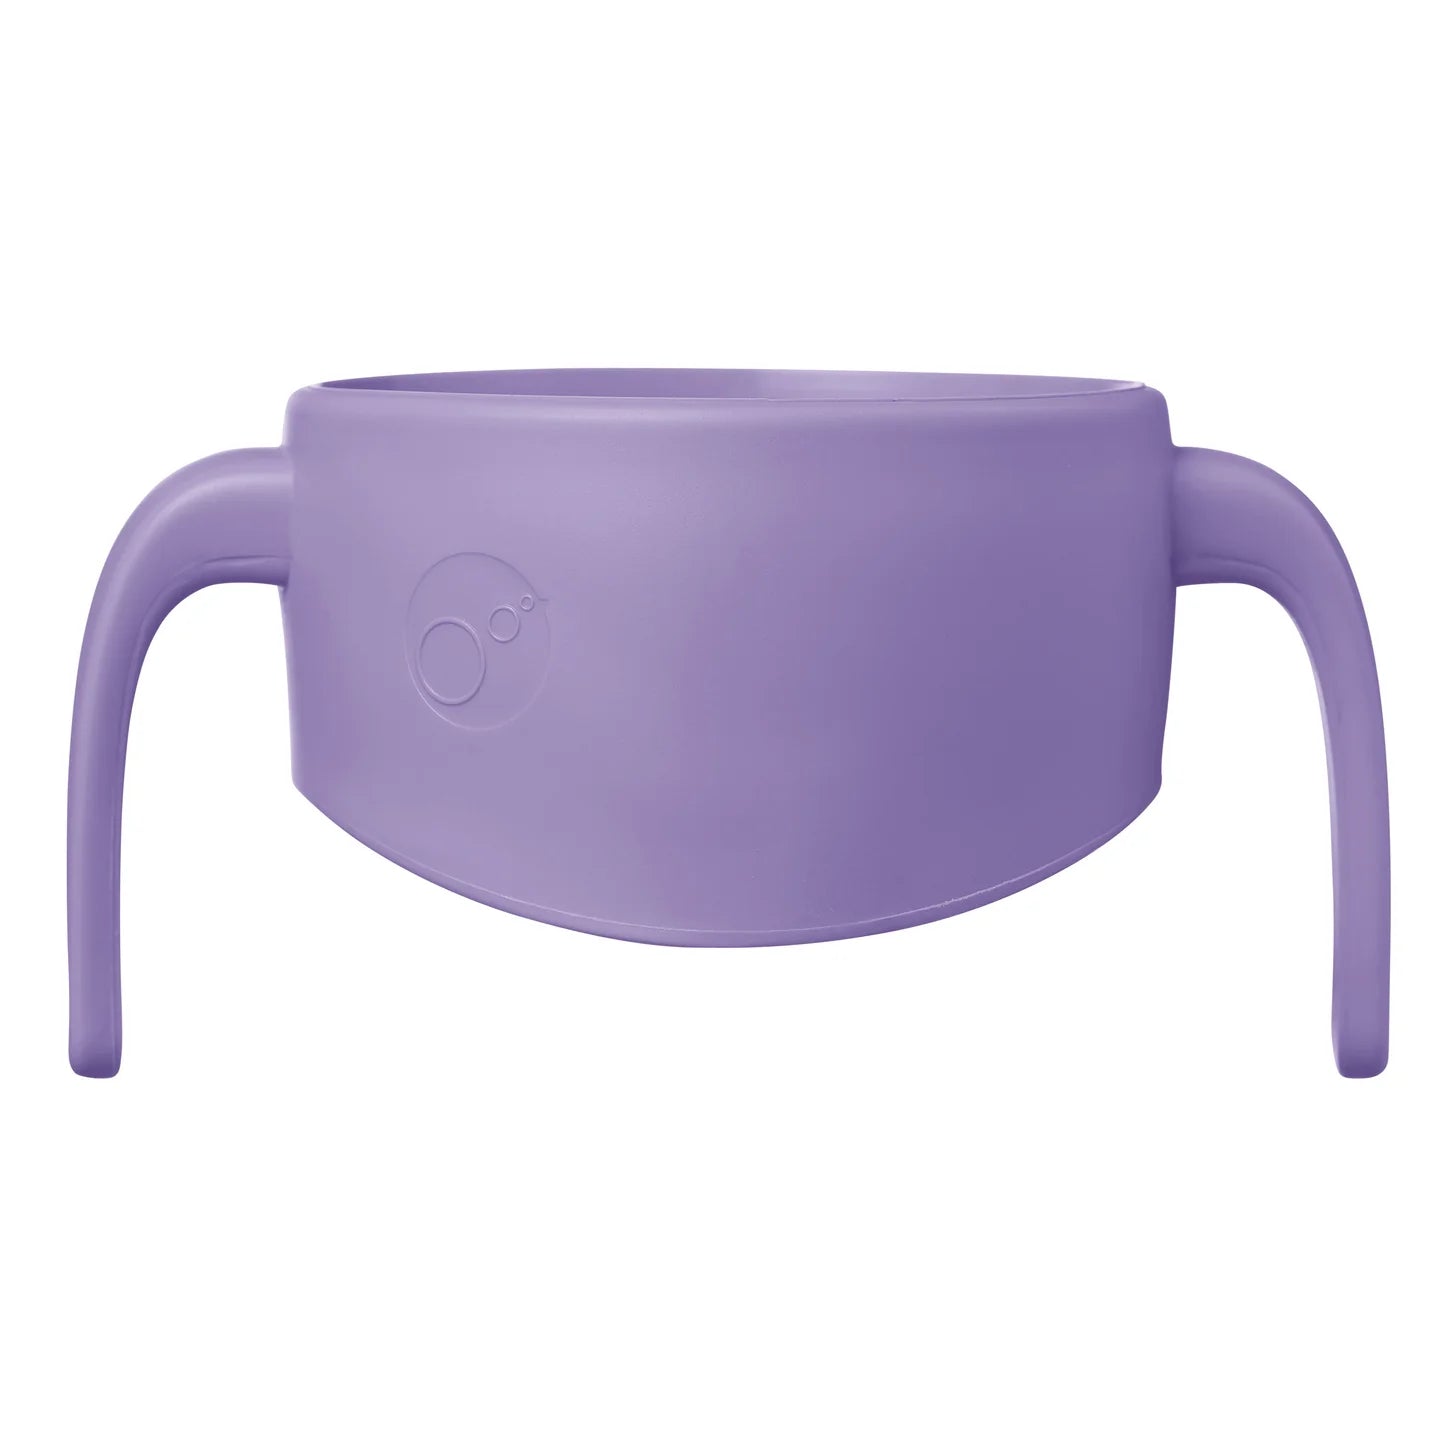 BBox 360 Cup - Lilac Pop